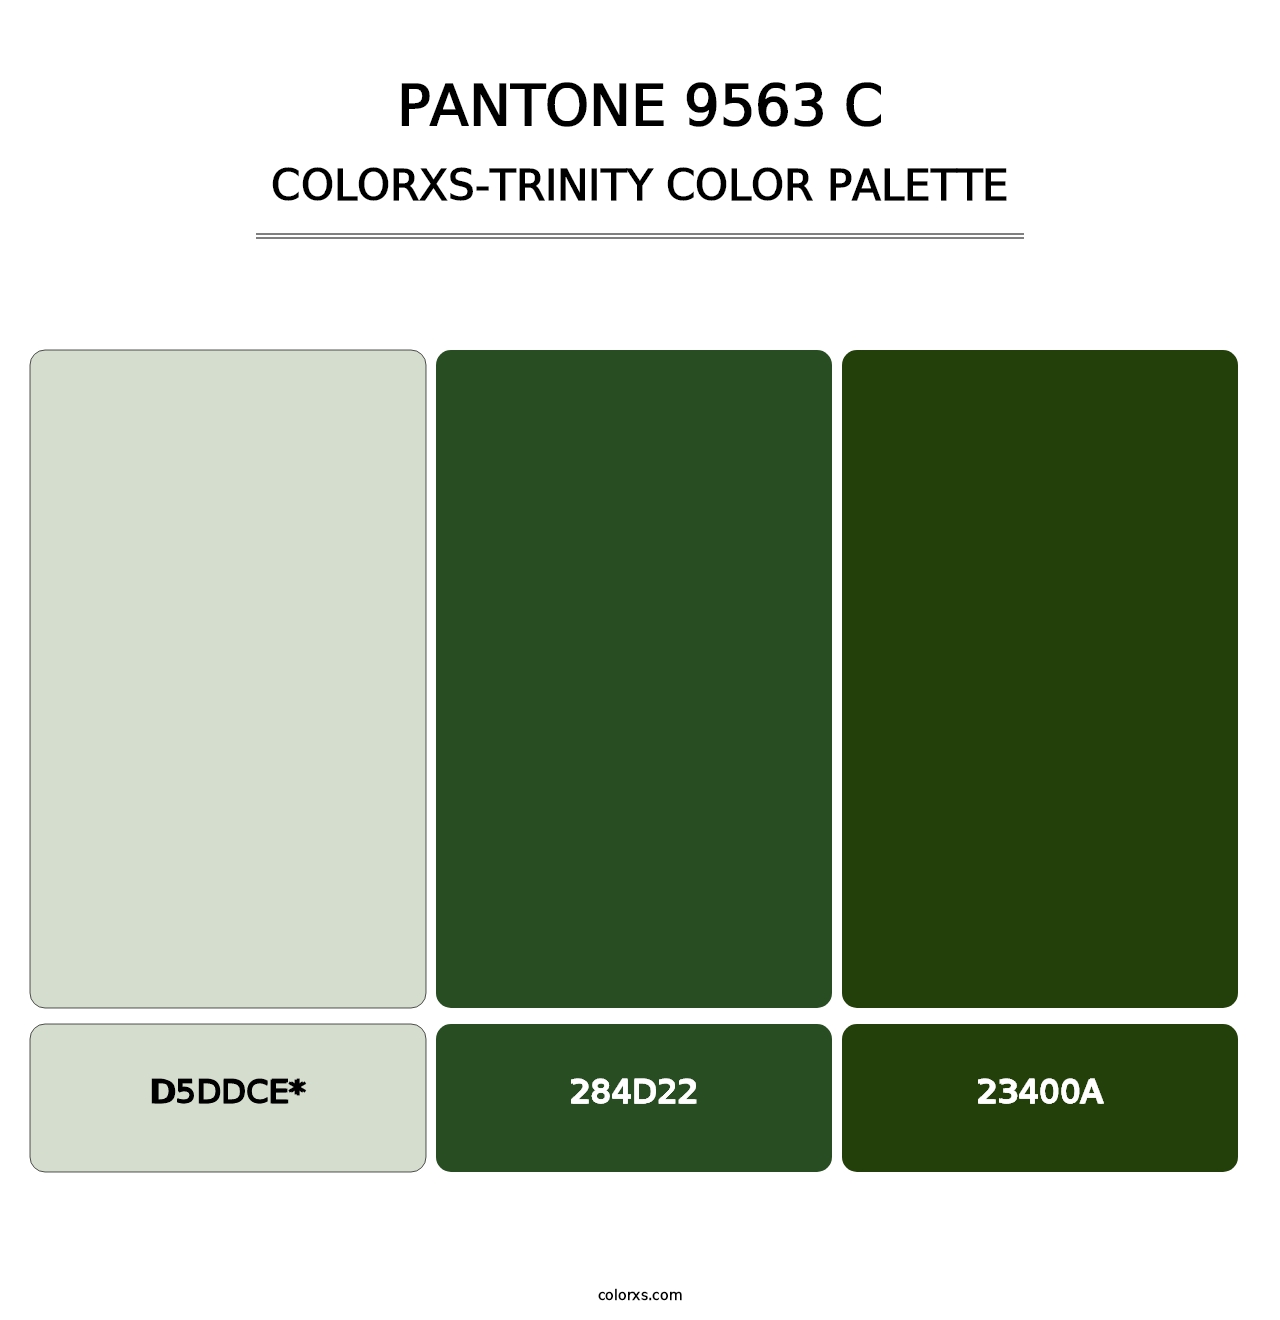 PANTONE 9563 C - Colorxs Trinity Palette